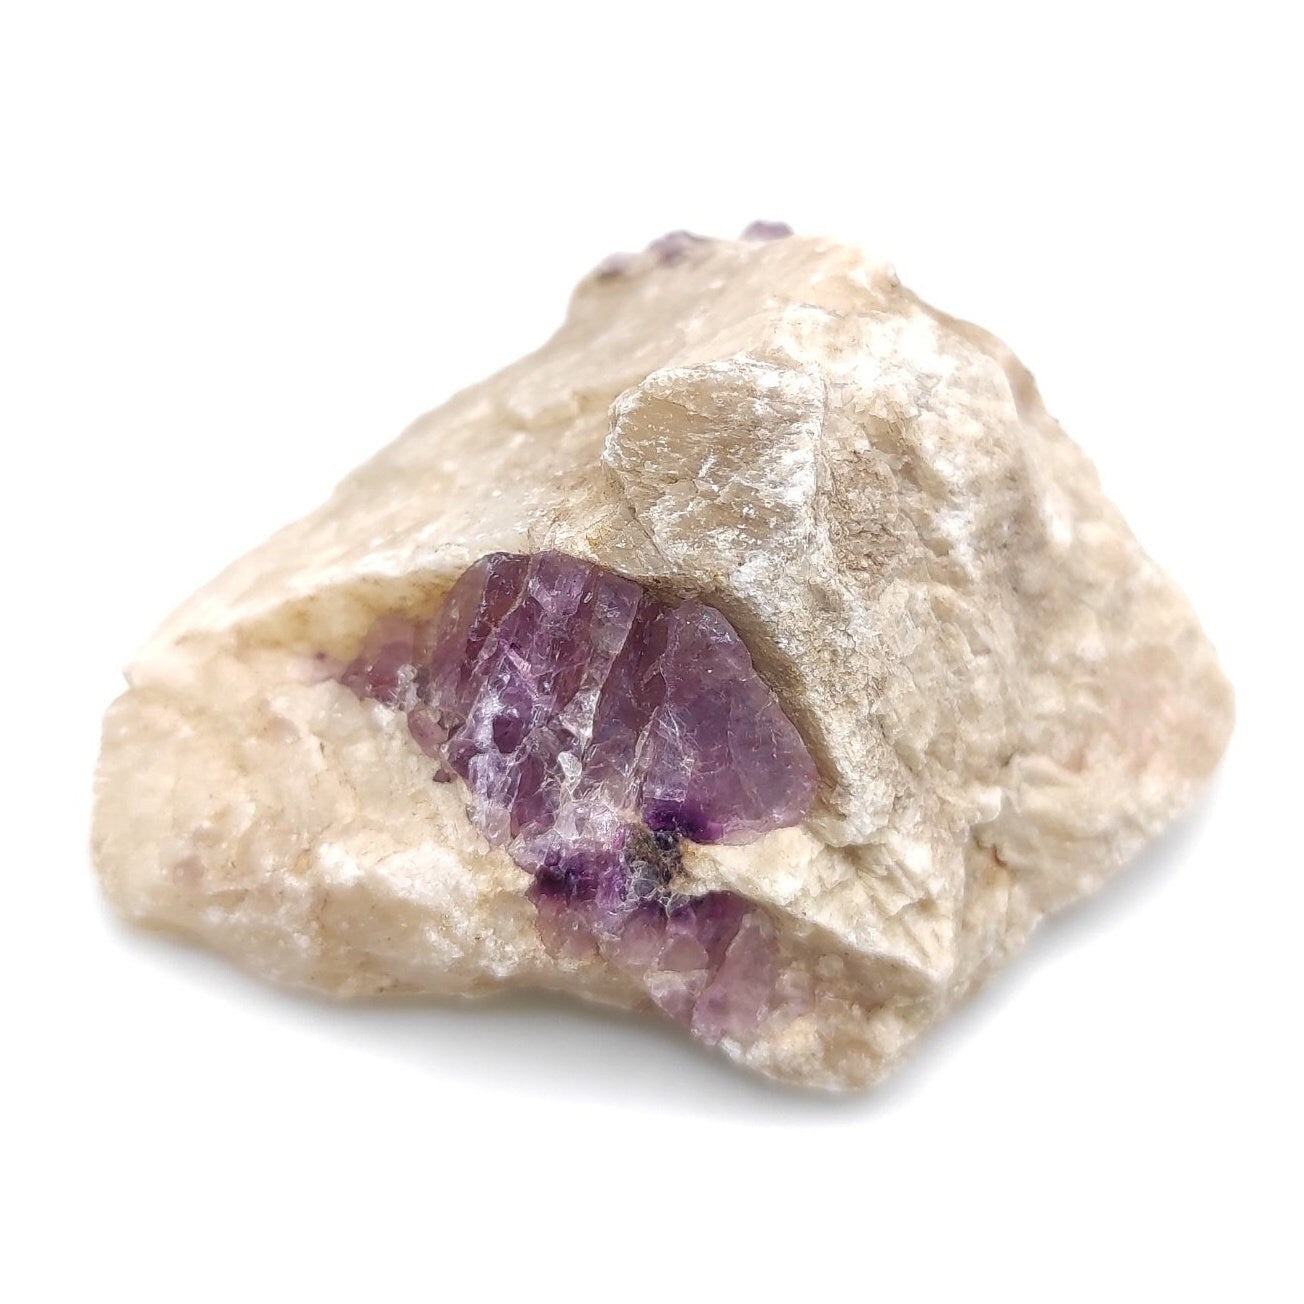 33g Purple Fluorite Crystal in Calcite Rough Purple Fluorite with White Calcite Gemstones Minerals Canadian Fluorite Rough Gemstones Crystal